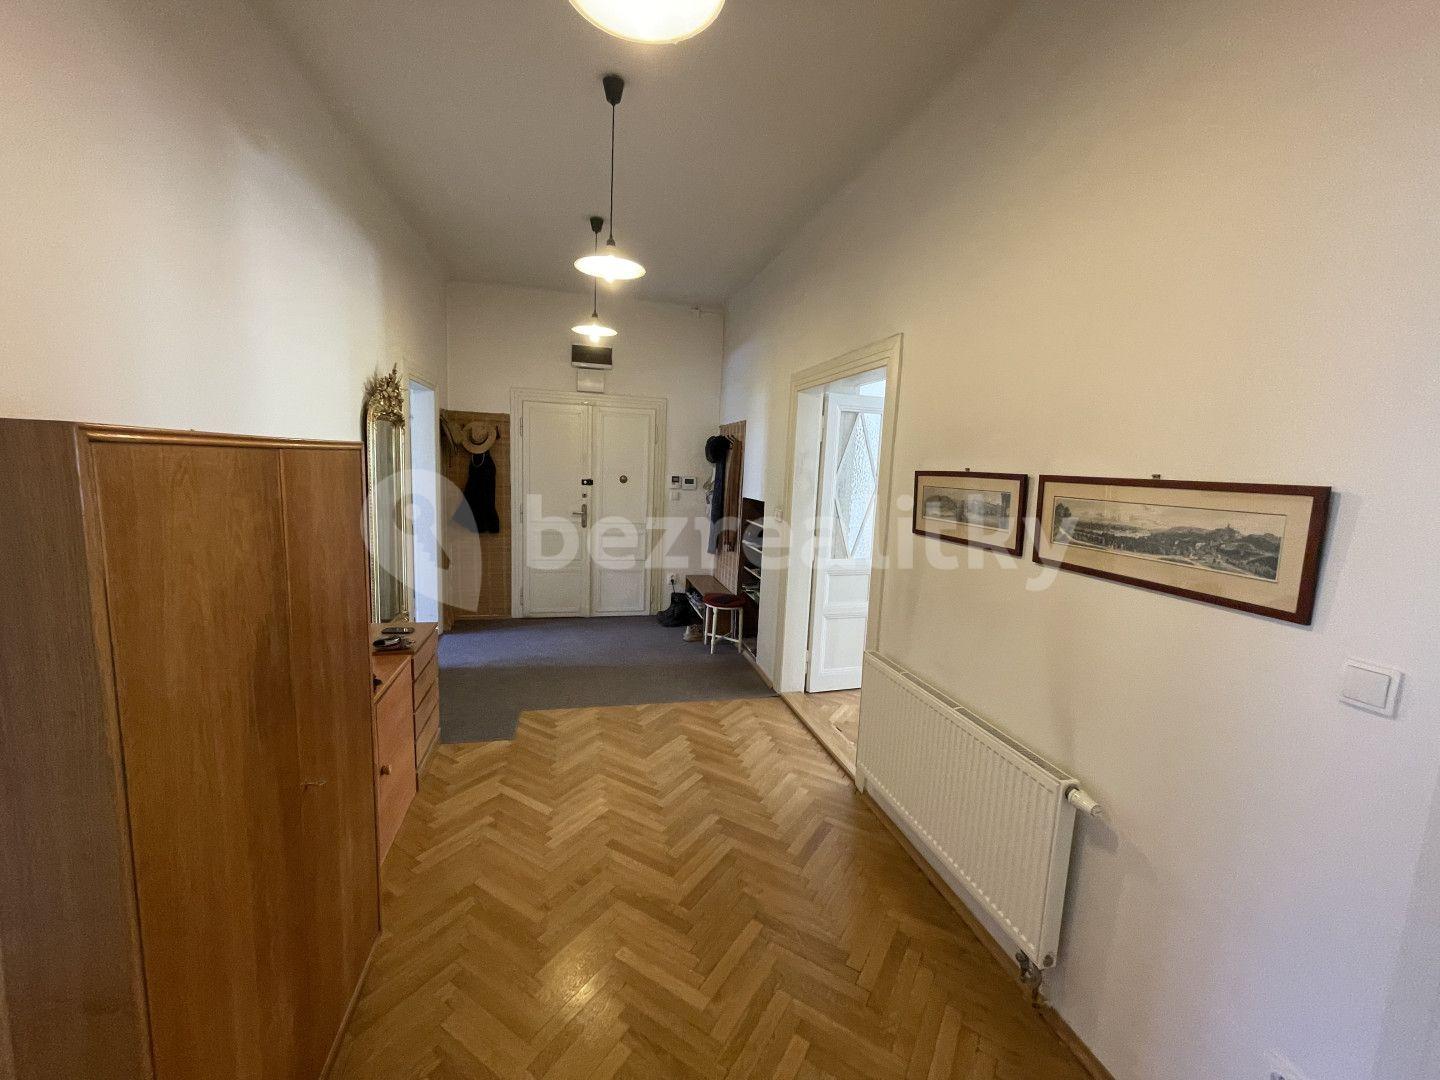 4 bedroom flat for sale, 172 m², Mickiewiczova, Prague, Prague